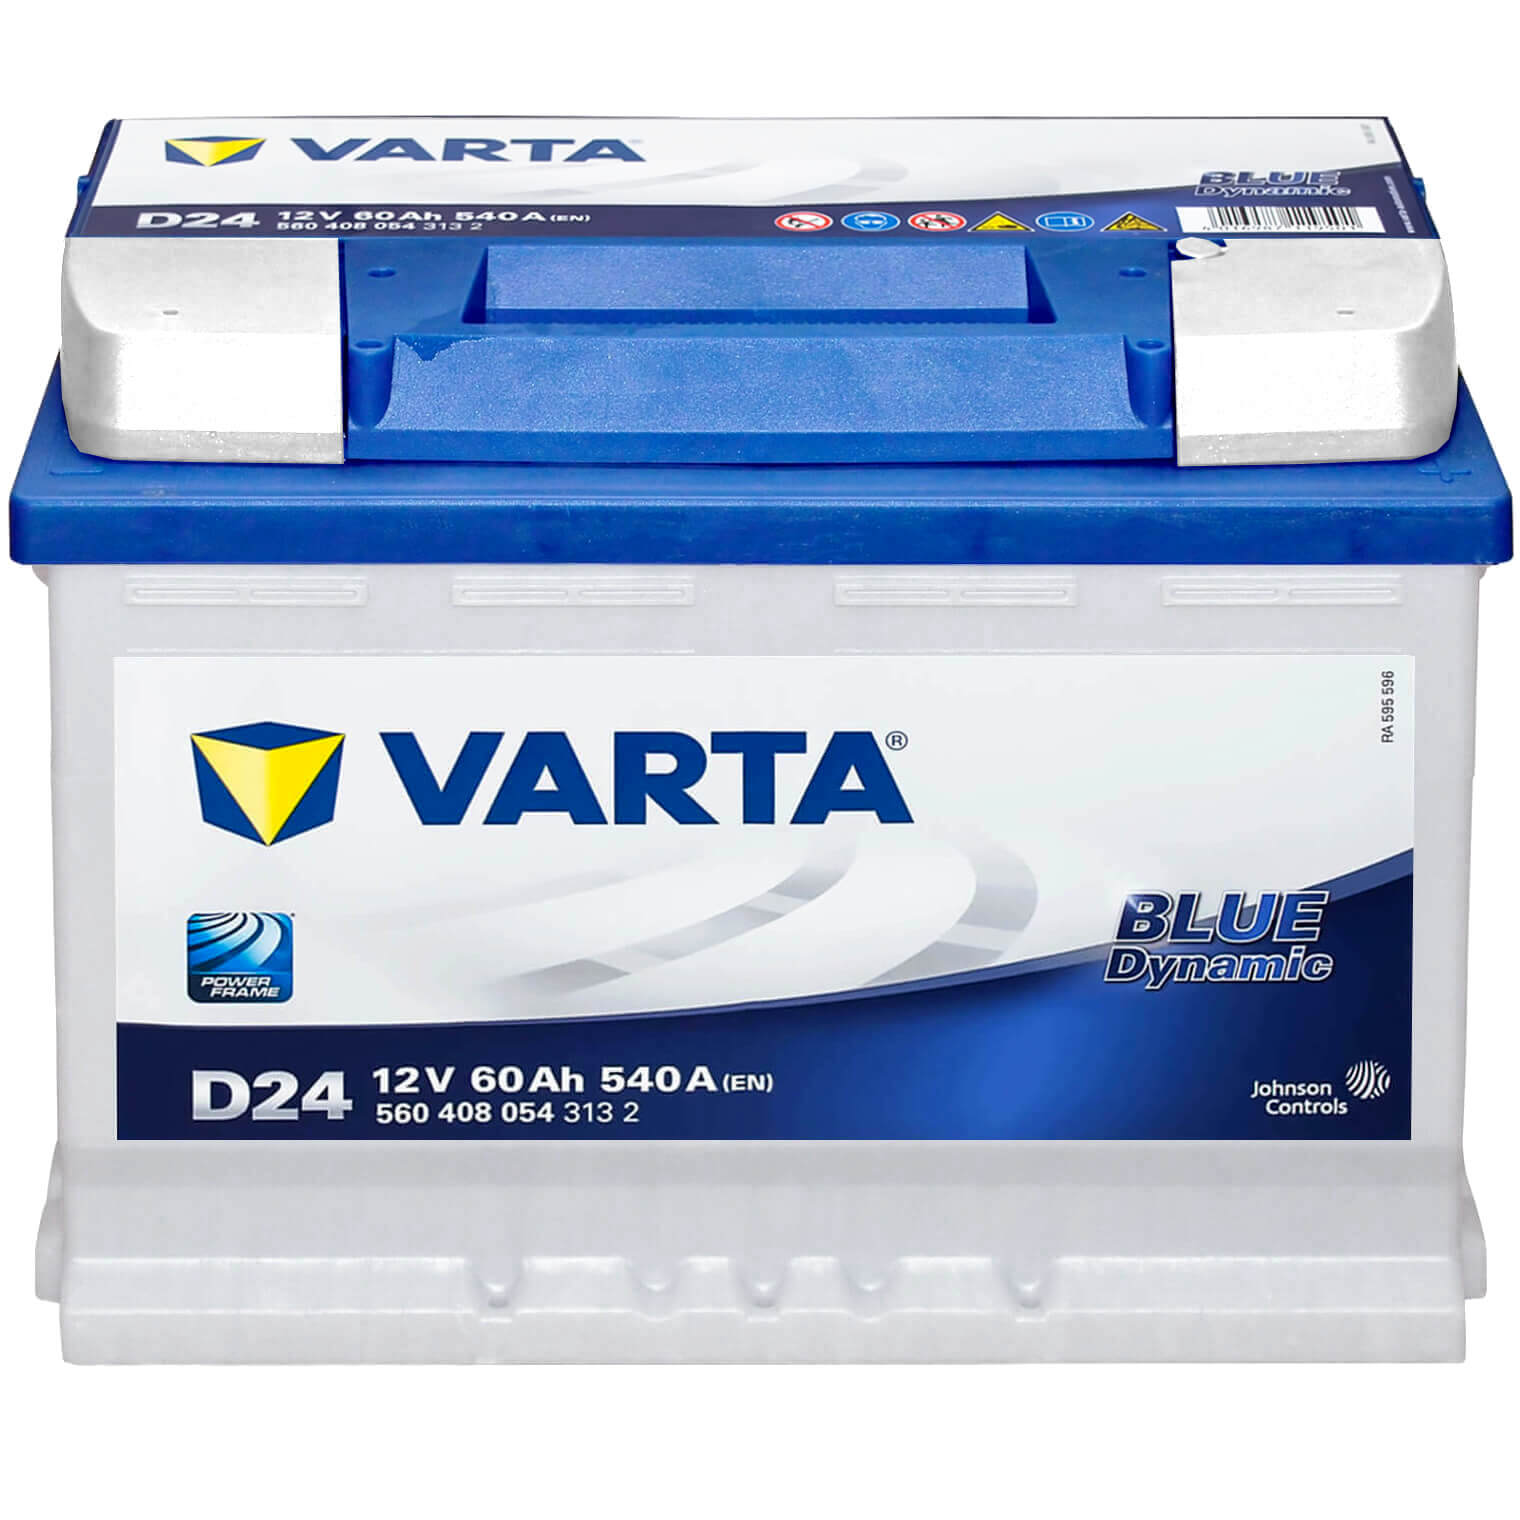 VARTA BLUE dynamic, D48 Batterie 5604110543132 12V 60Ah 540A B00